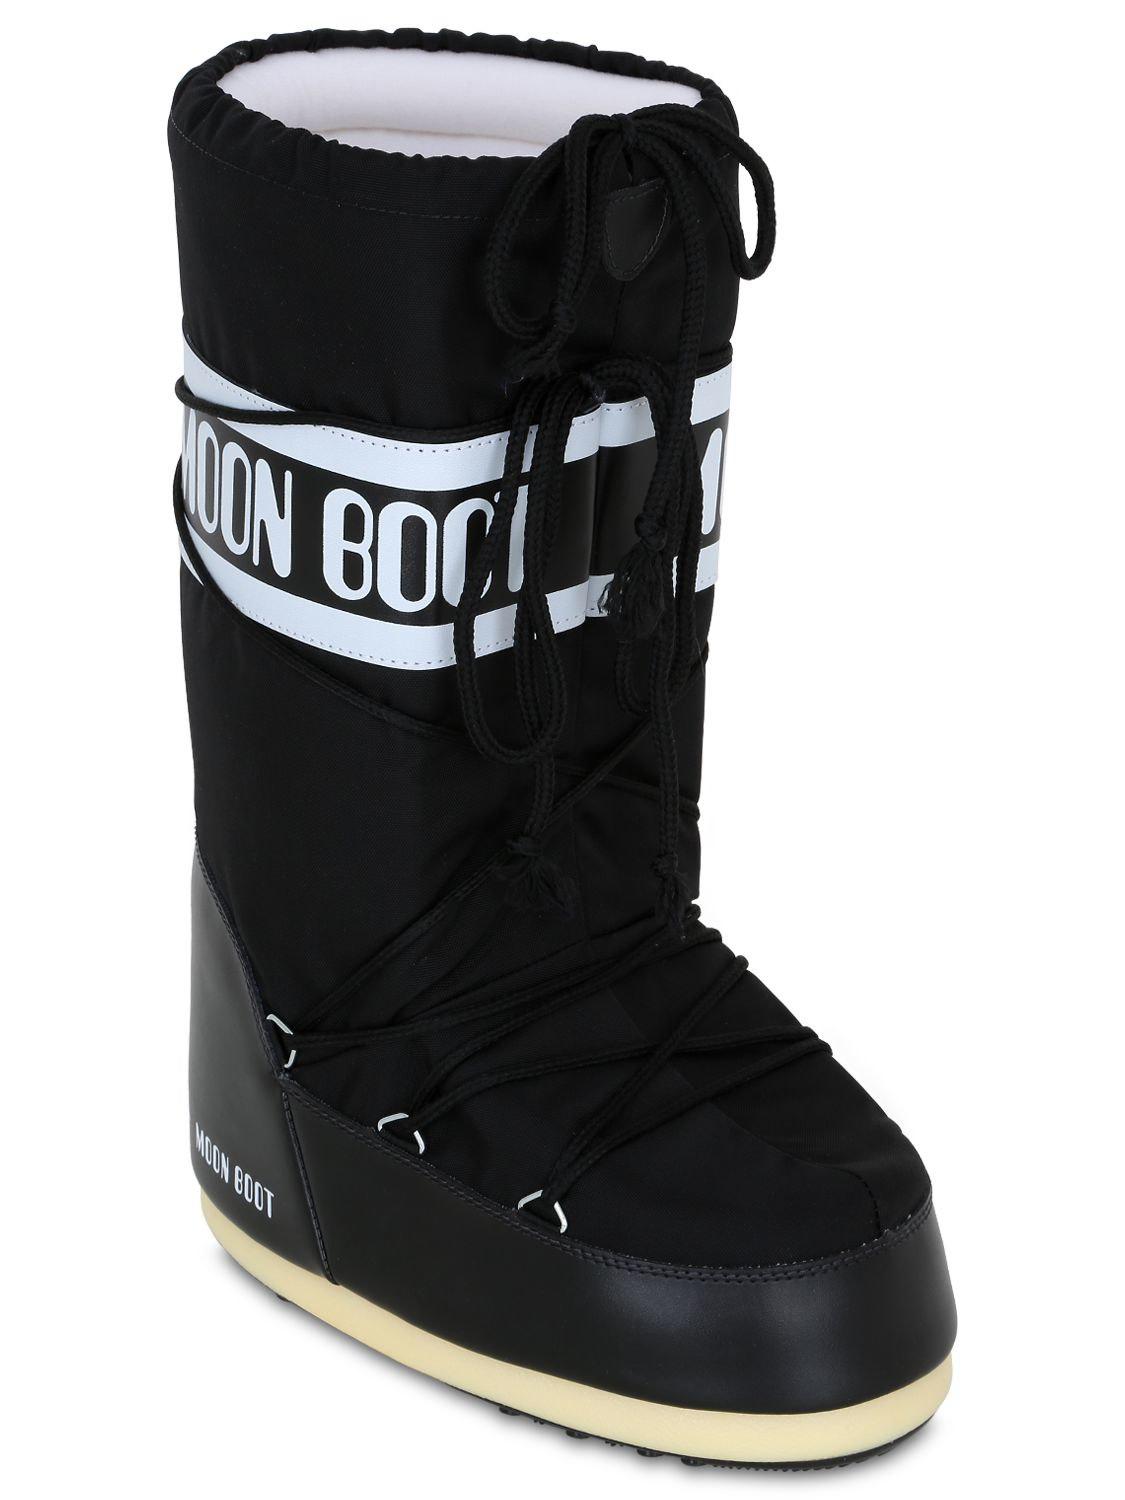 moon-boot-BLACK-Classic-Nylon-Waterproof-Snow-Boots.jpeg